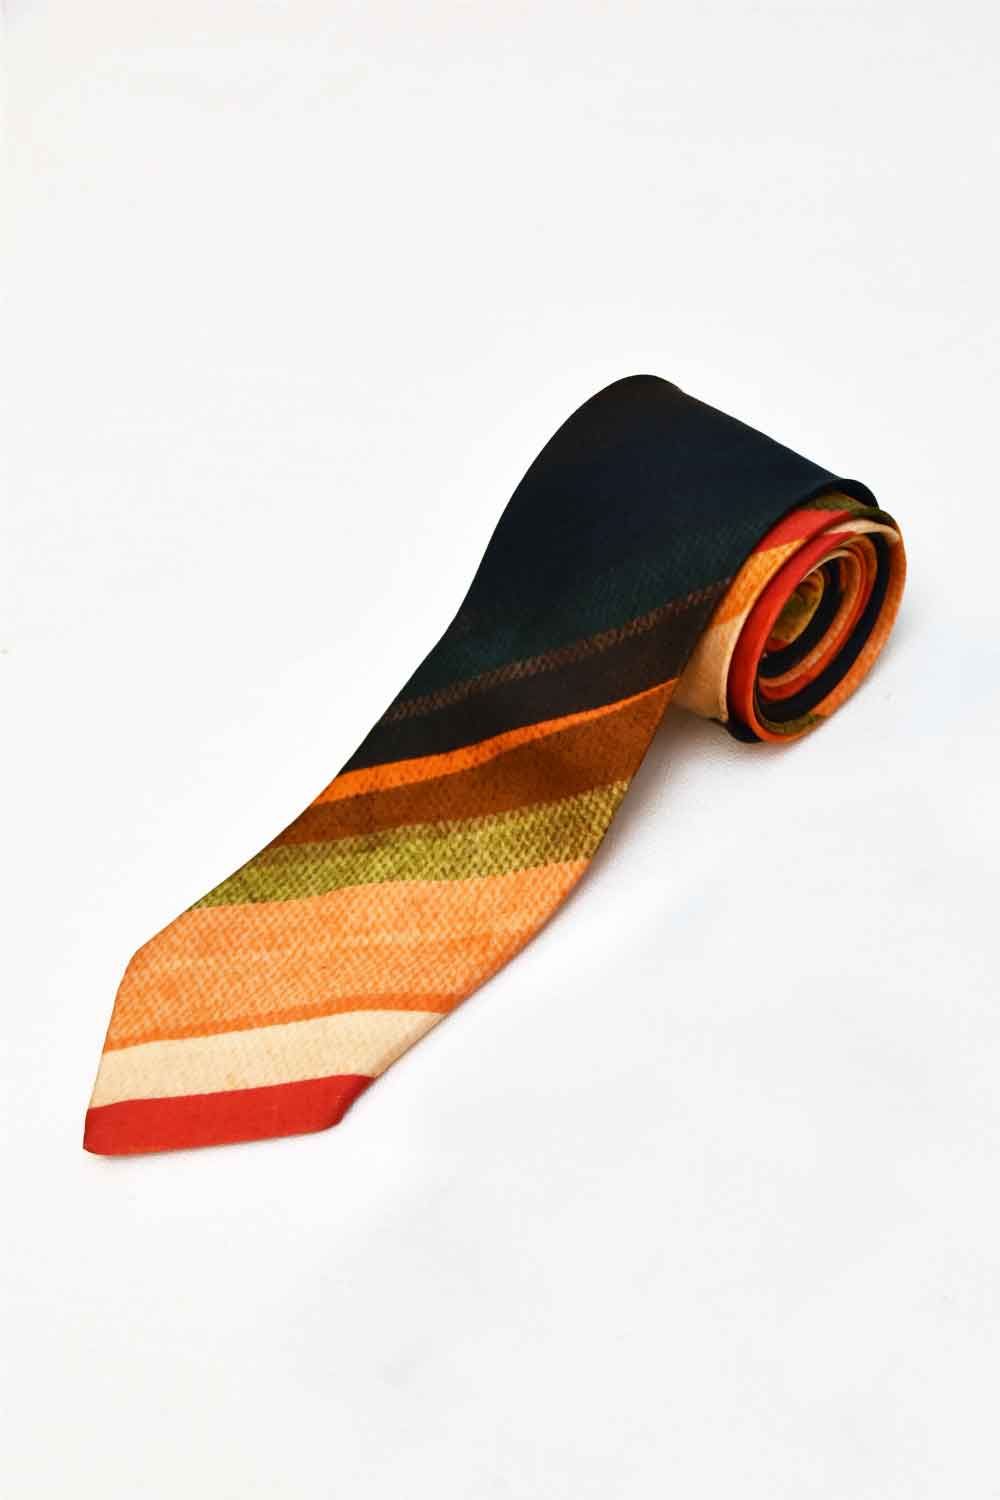 Calico Stripe Tie - Ted Ferde